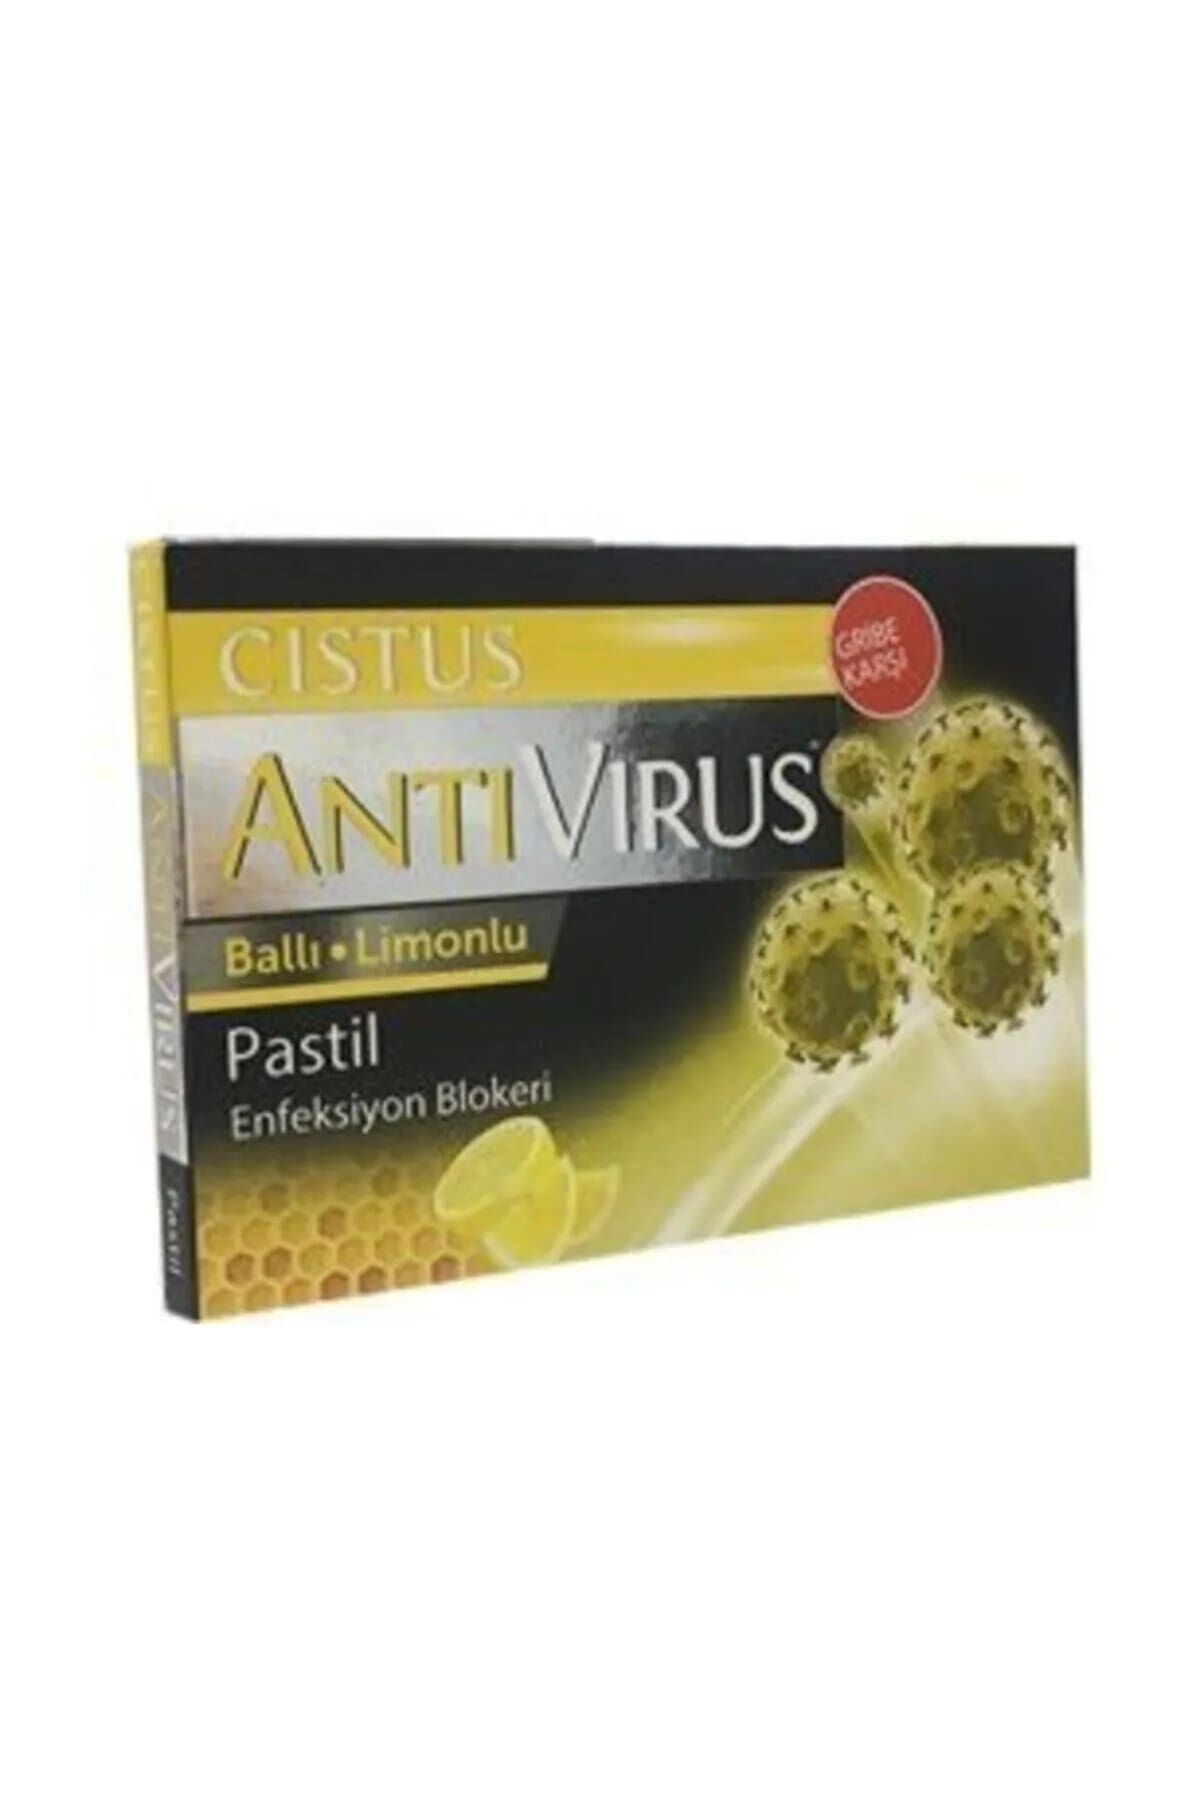 CISTUS Antivirus Ballı Limonlu Pastil 10 Adet